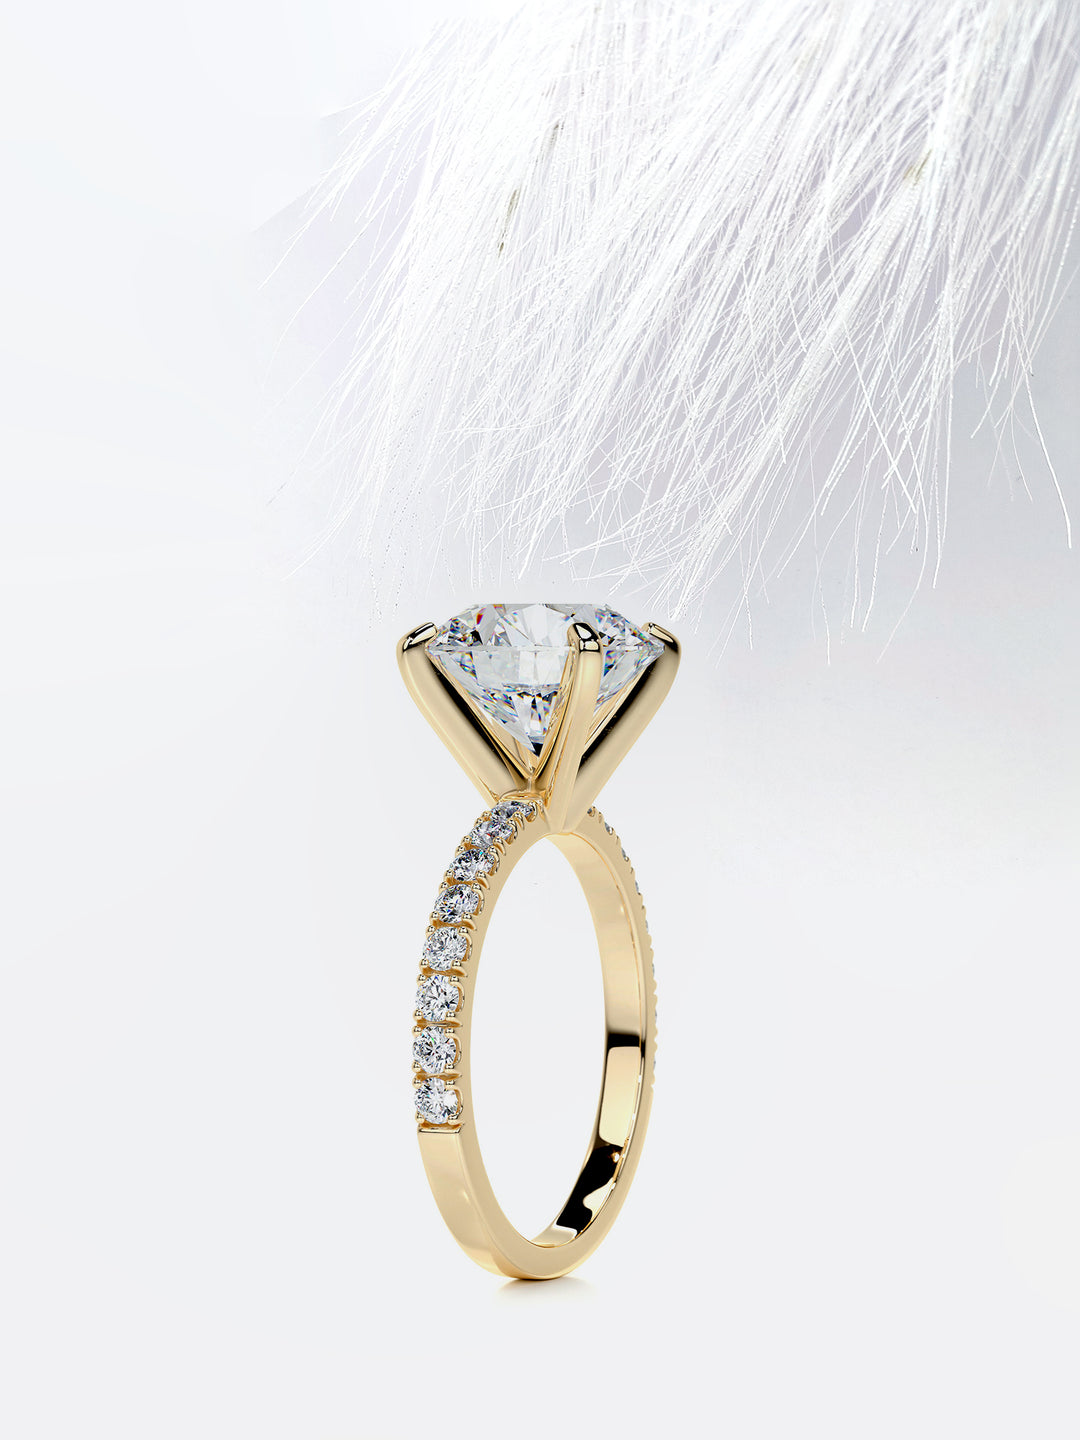 5.0CT Round Cut Moissanite Diamond Pave Engagement Ring